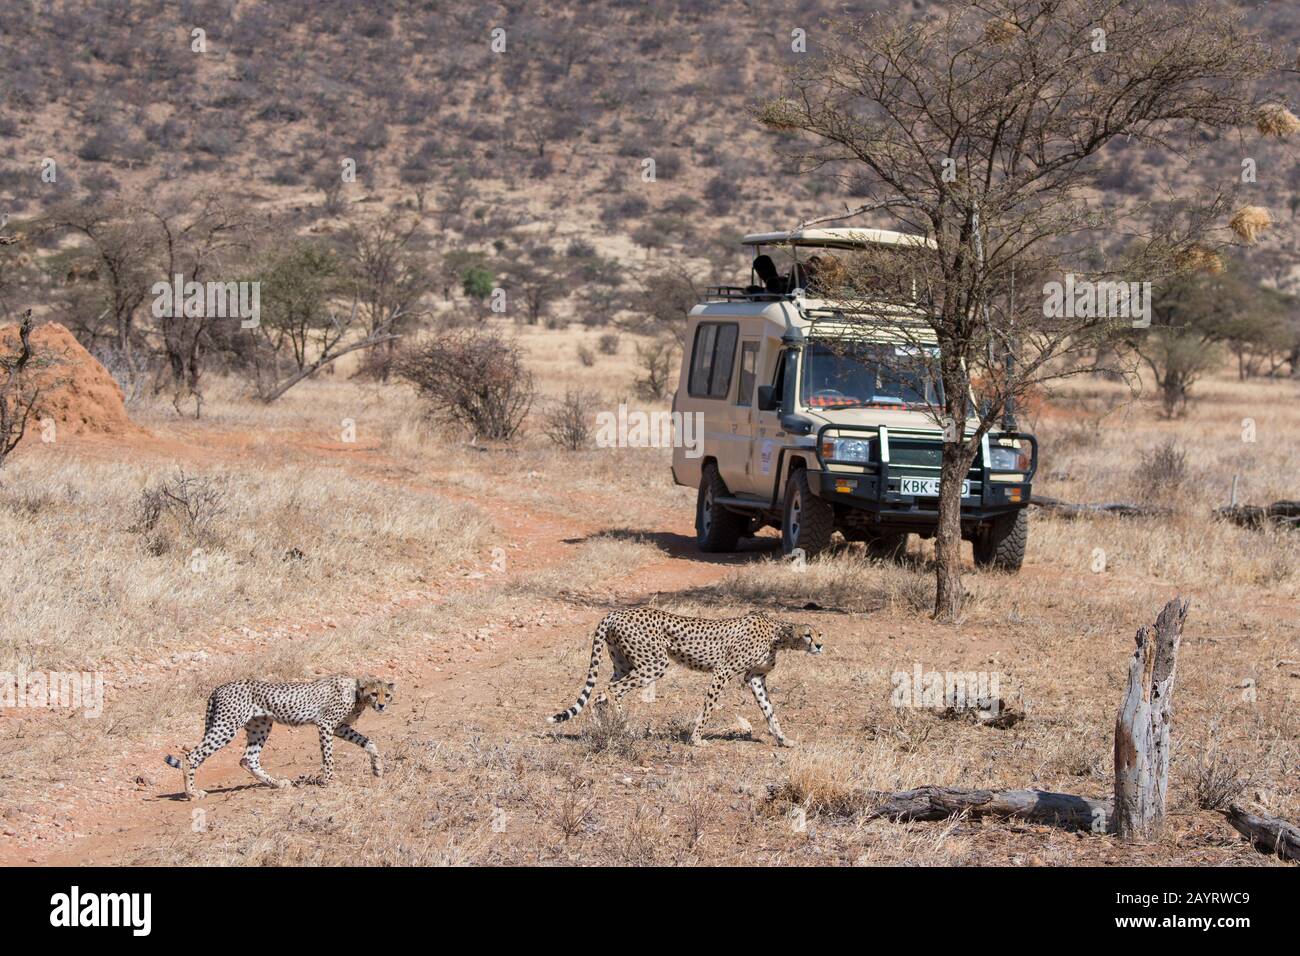 CheetahS (Acinonyx jubatus) with a safari vehicle in the background in the Samburu National Reserve in Kenya. Stock Photo